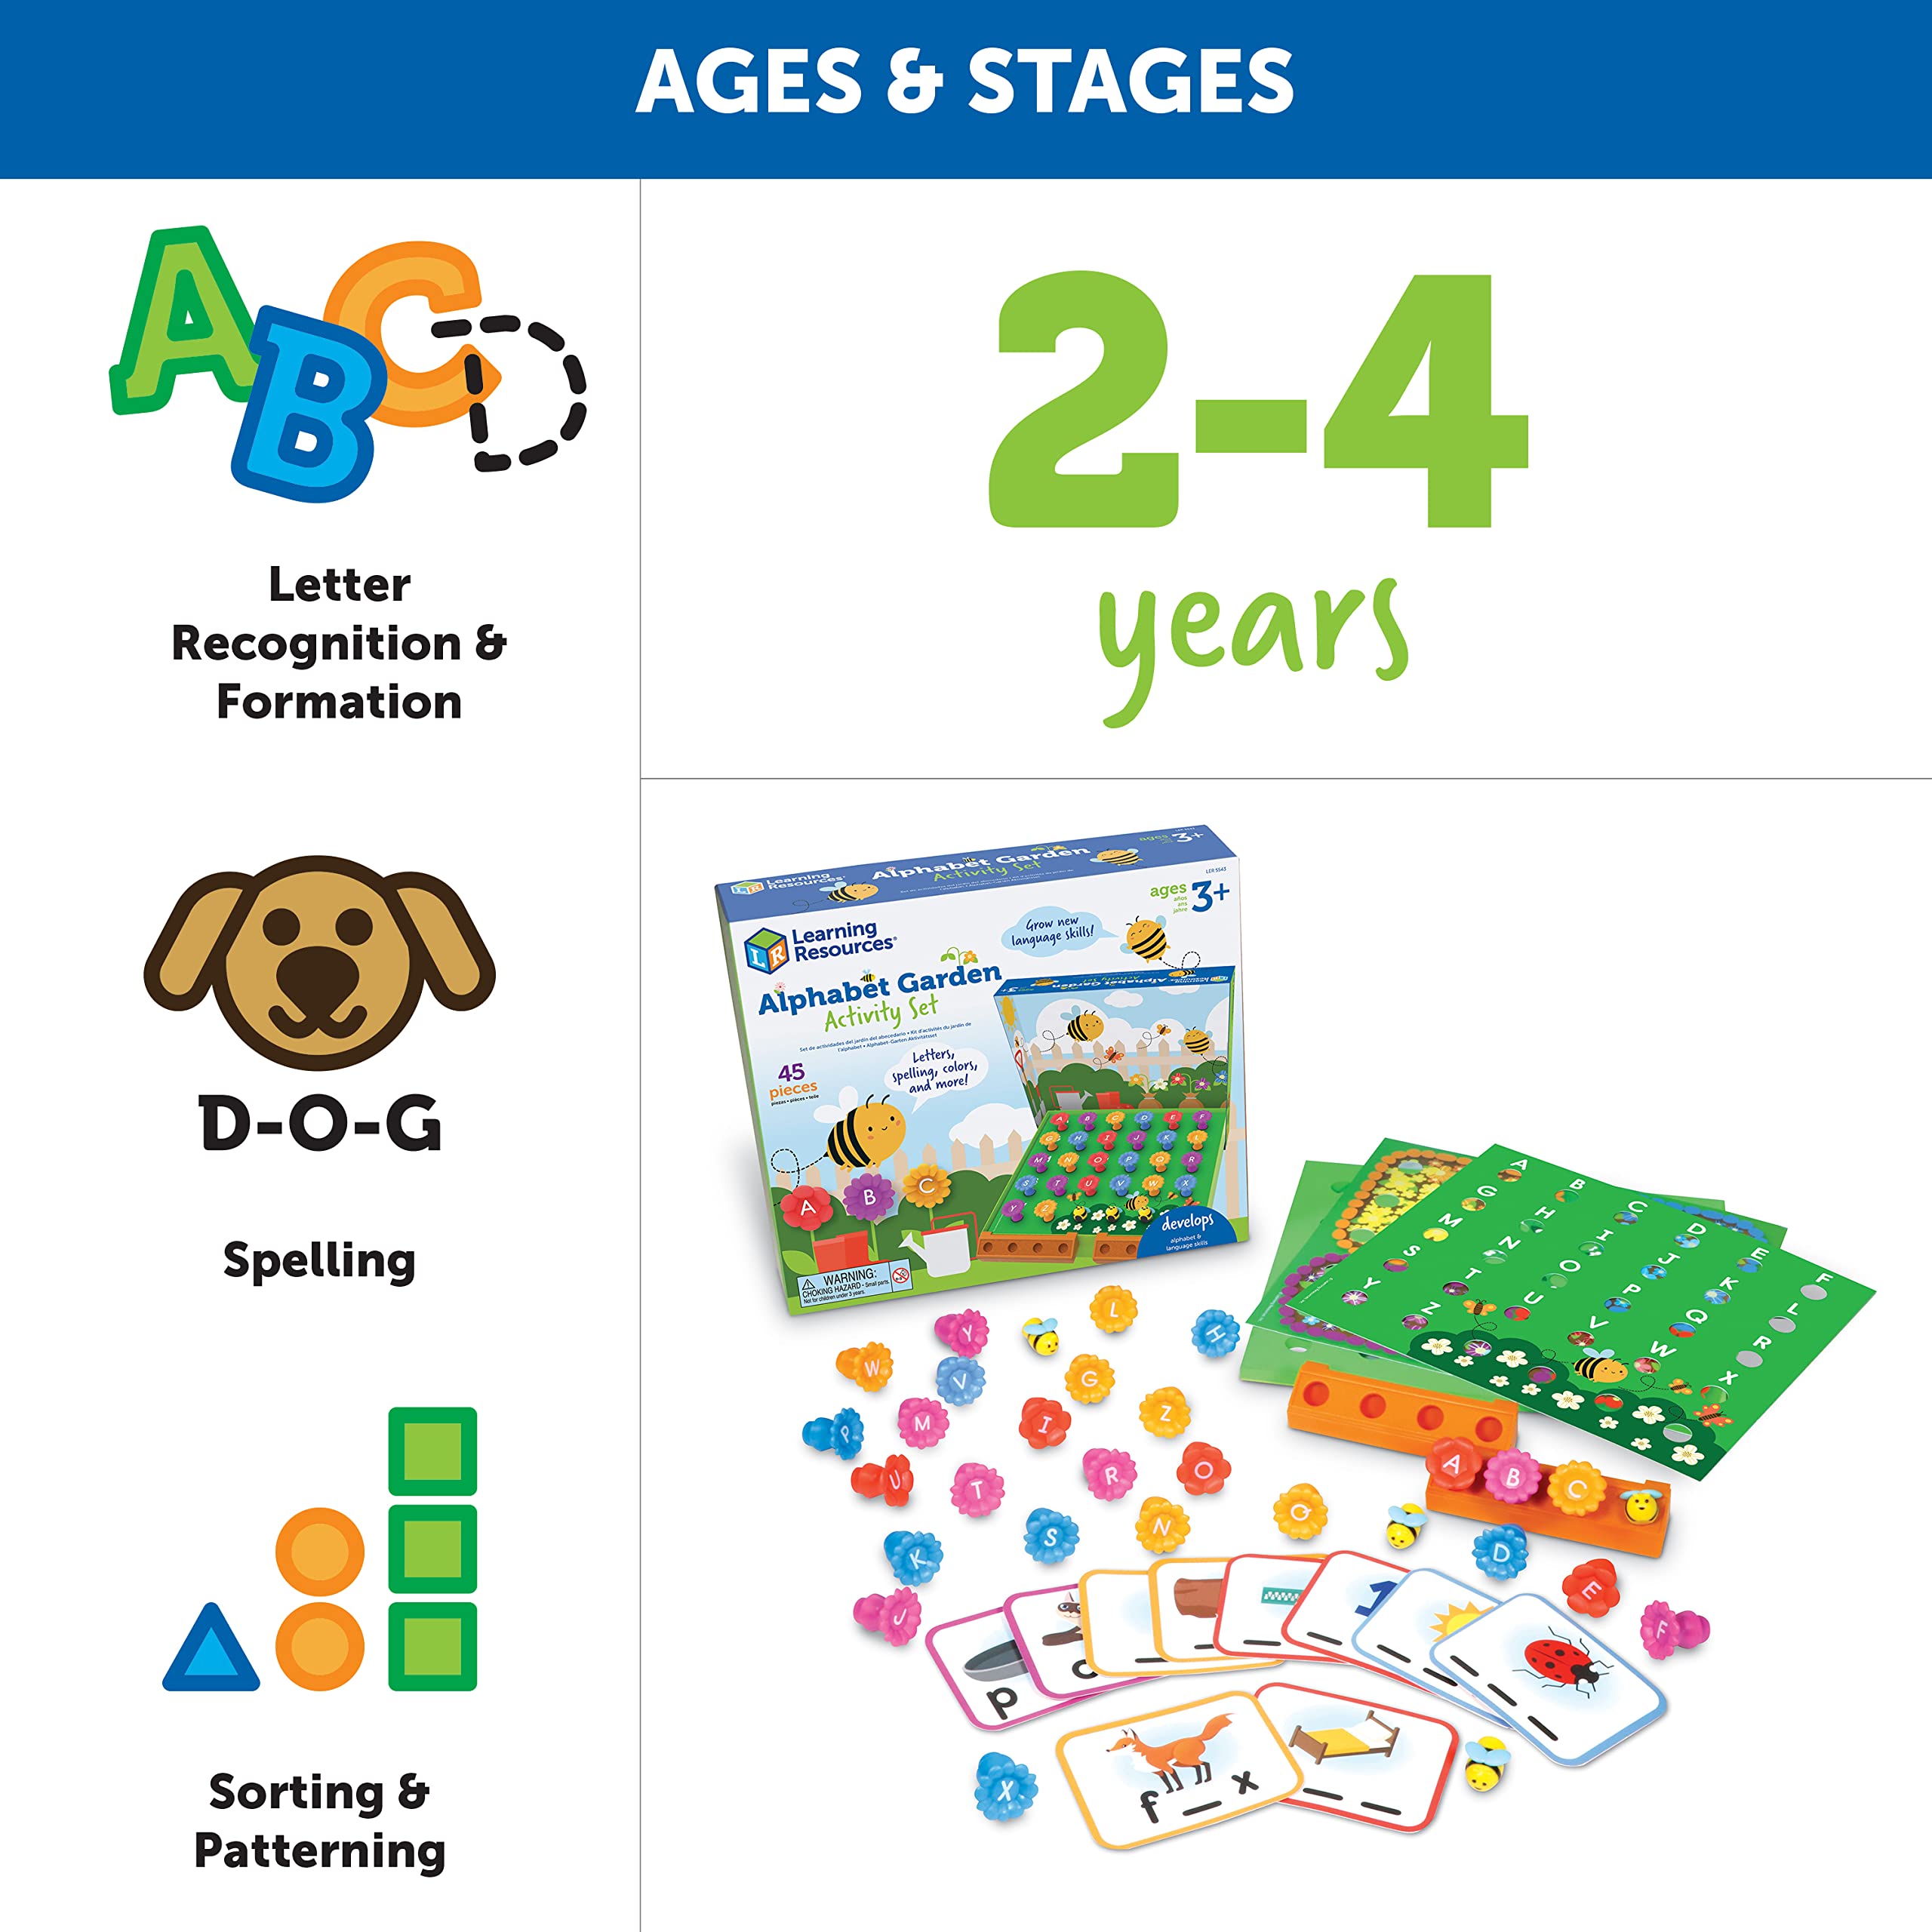 Learning Resources Alphabet Garden Activity Set, Educational Indoor Games, Preschool Alphabet, Toddler Brain Toys, Toddler Preschool Learning, Garden Toys, 45 Pieces, Age 3+